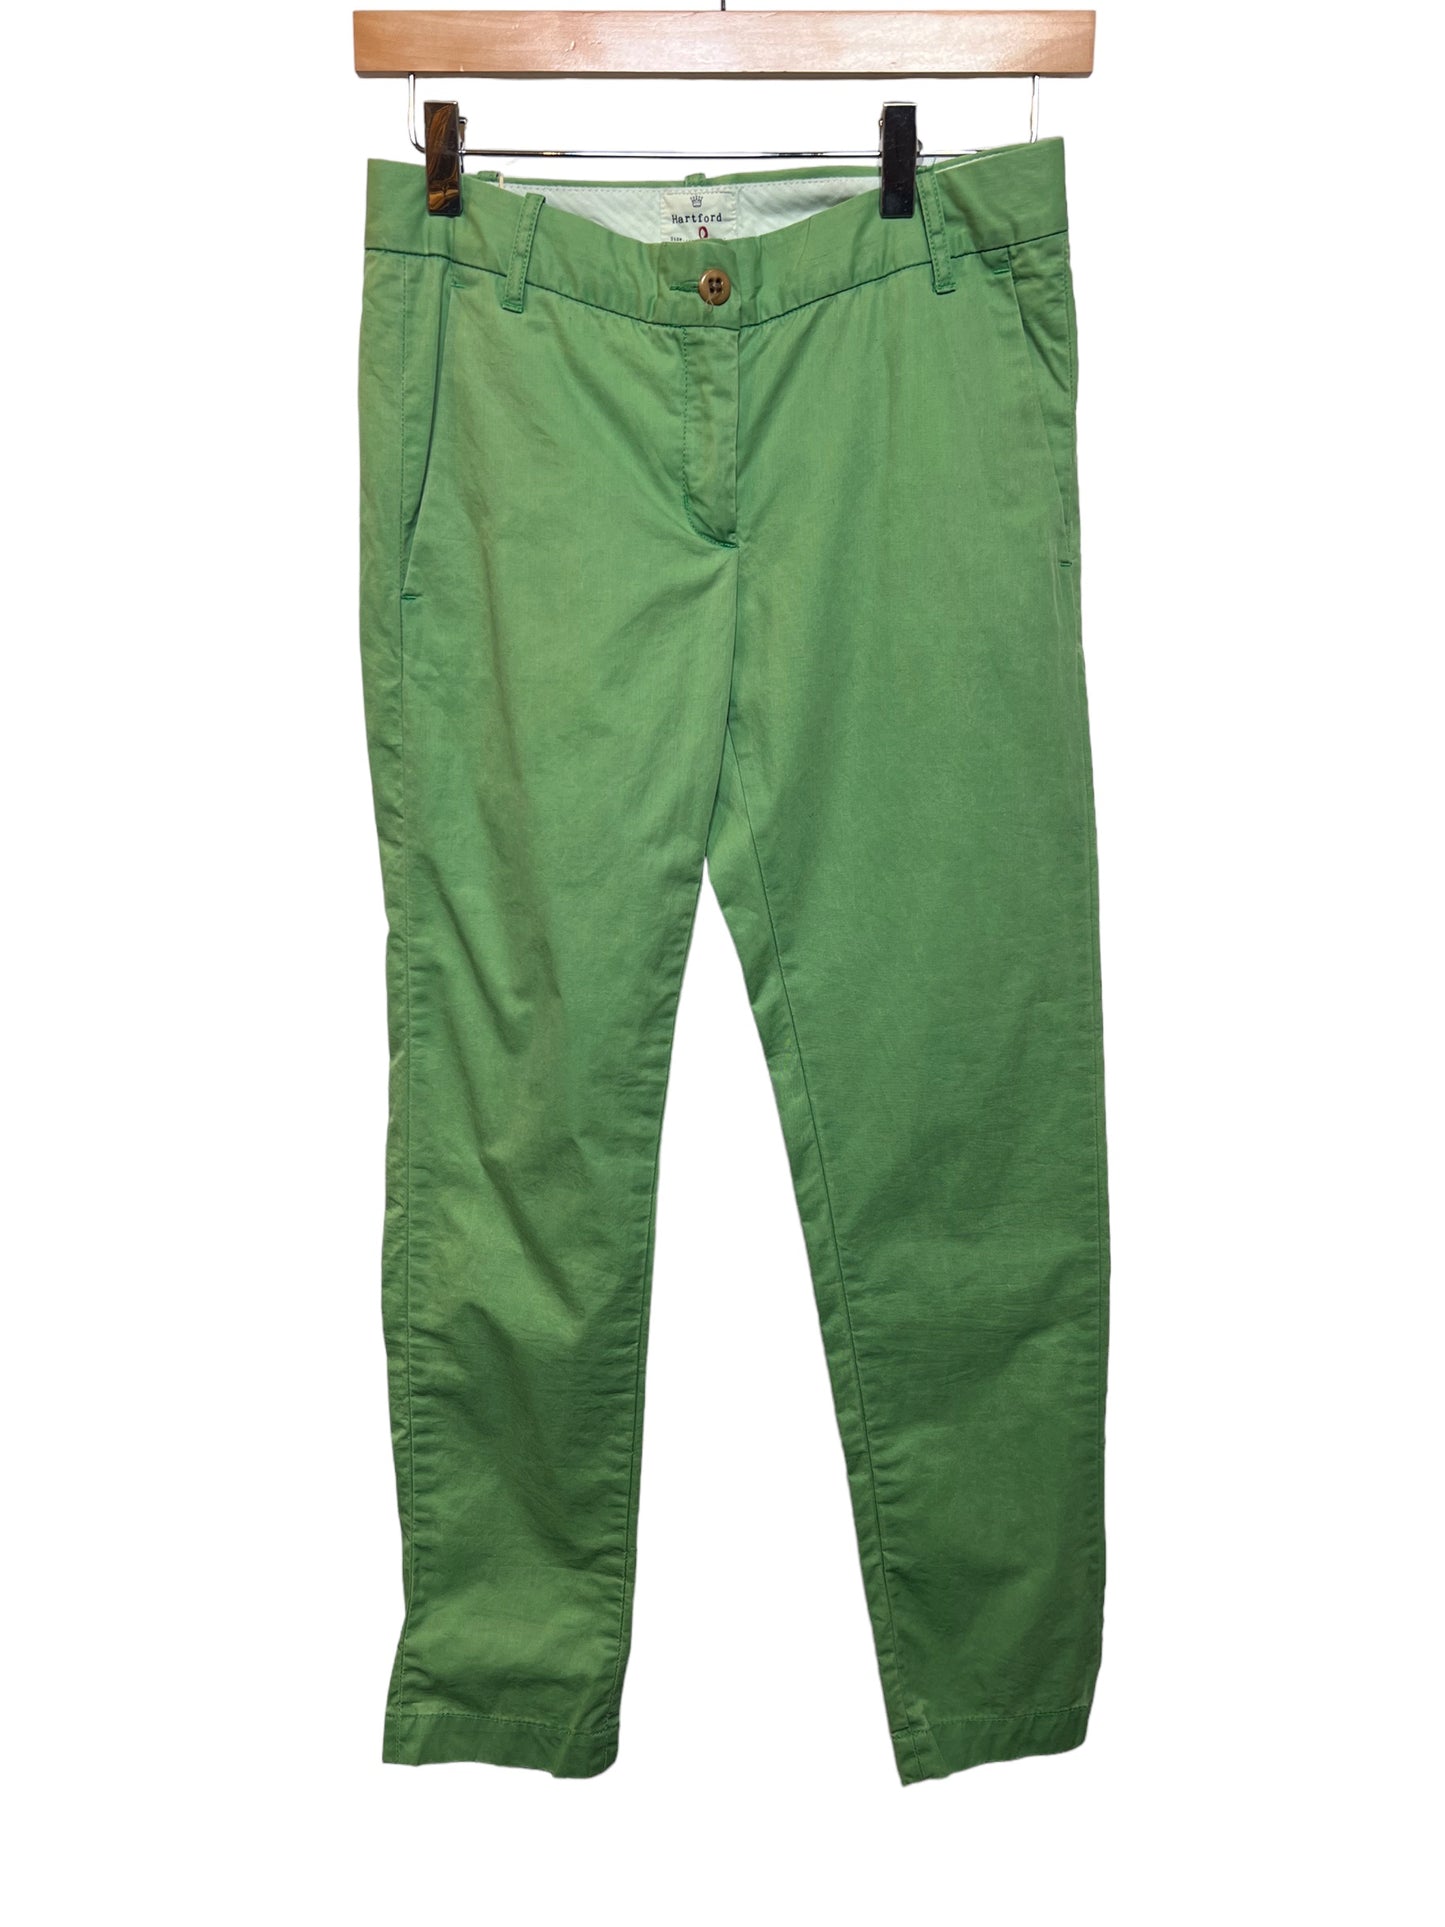 Hartford Women’s Green Trousers (Size W28)